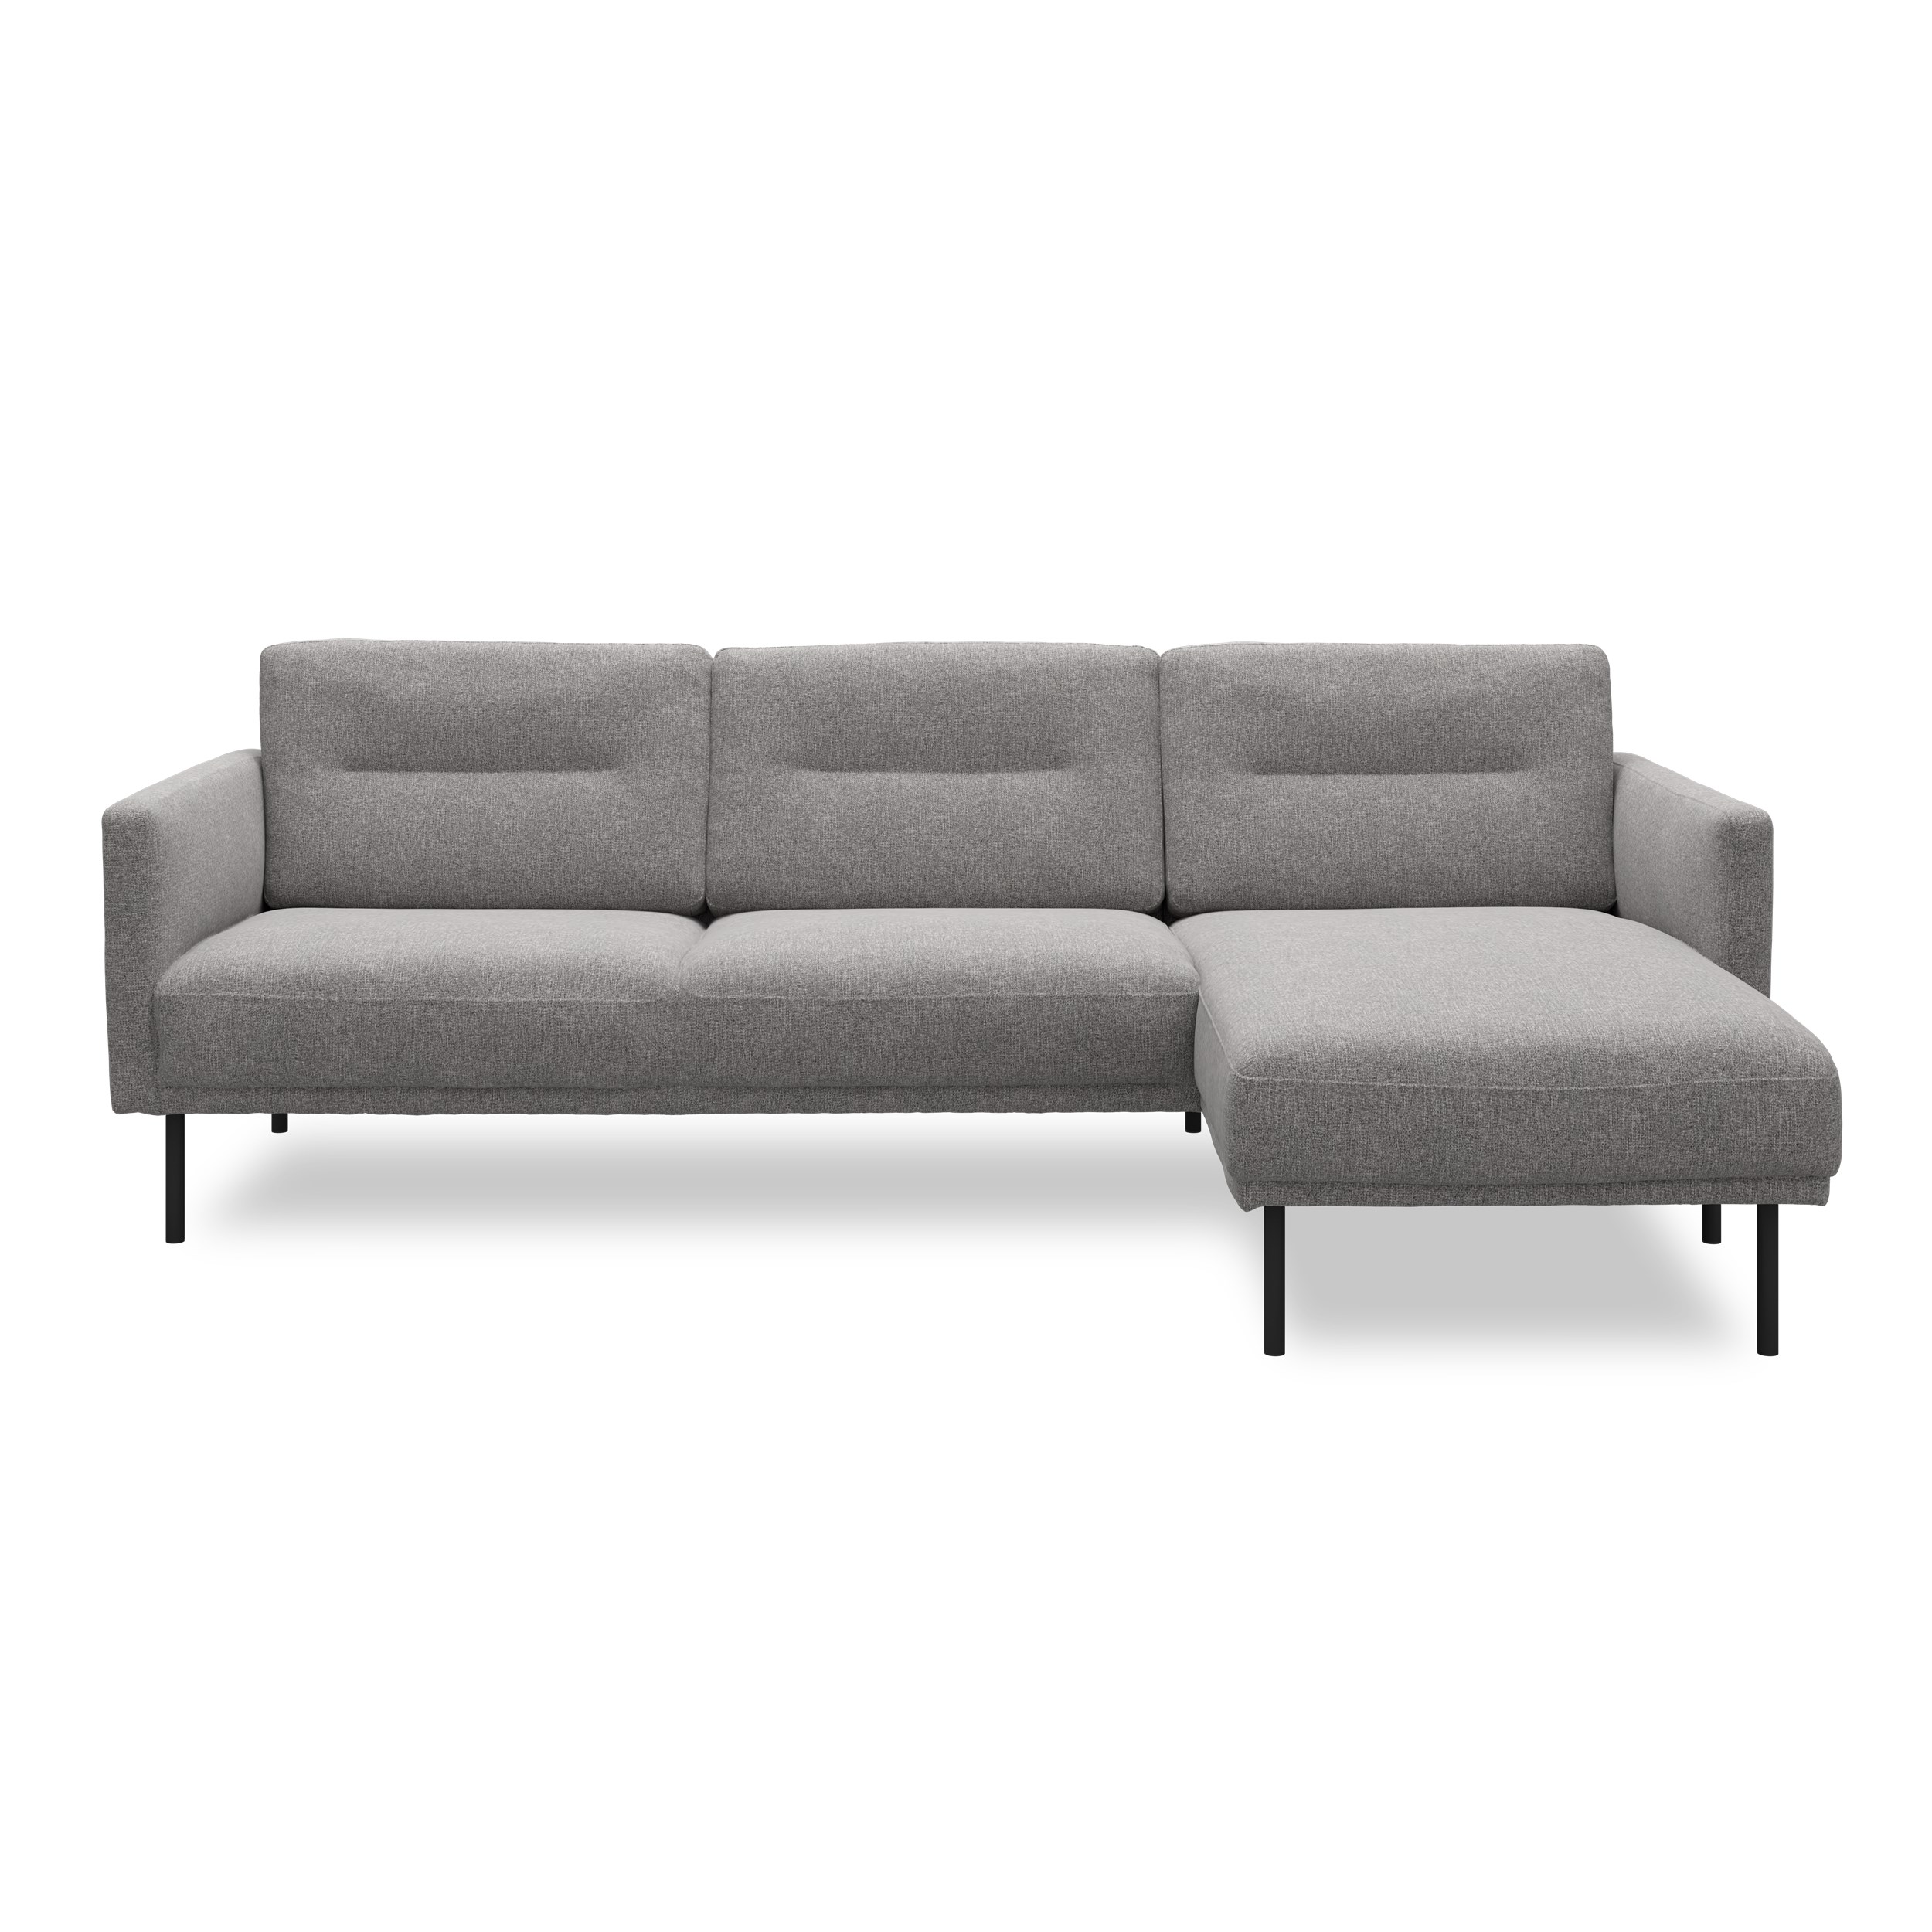 Larvik Sofa med chaiselong - Hampton 371 Grey stof og ben i sortlakeret metal